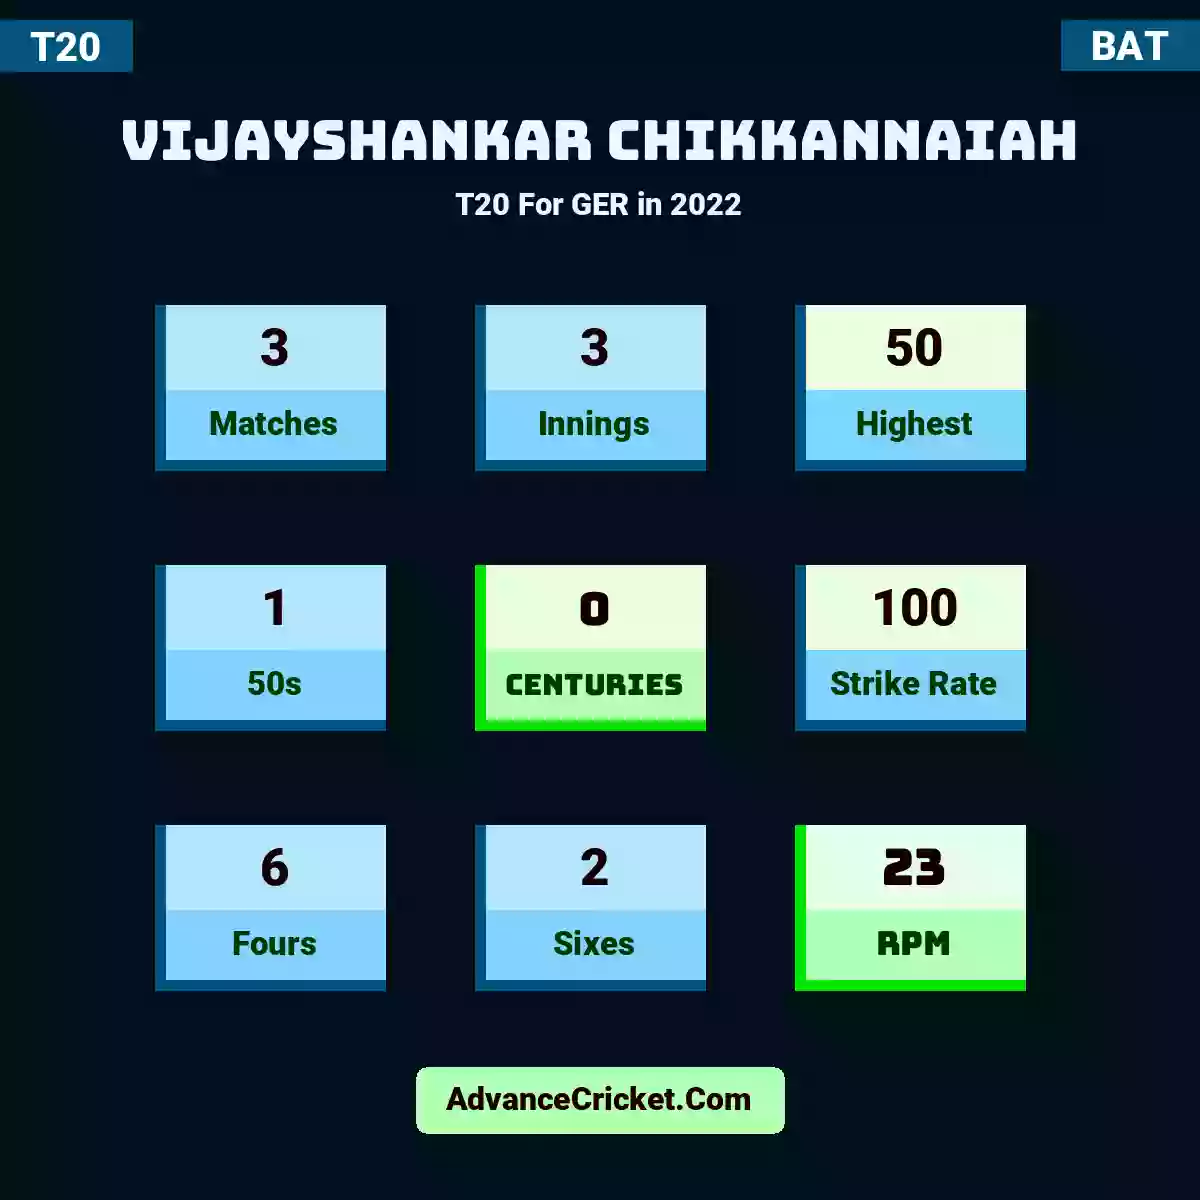 Vijayshankar Chikkannaiah T20  For GER in 2022, Vijayshankar Chikkannaiah played 3 matches, scored 50 runs as highest, 1 half-centuries, and 0 centuries, with a strike rate of 100. V.Chikkannaiah hit 6 fours and 2 sixes, with an RPM of 23.